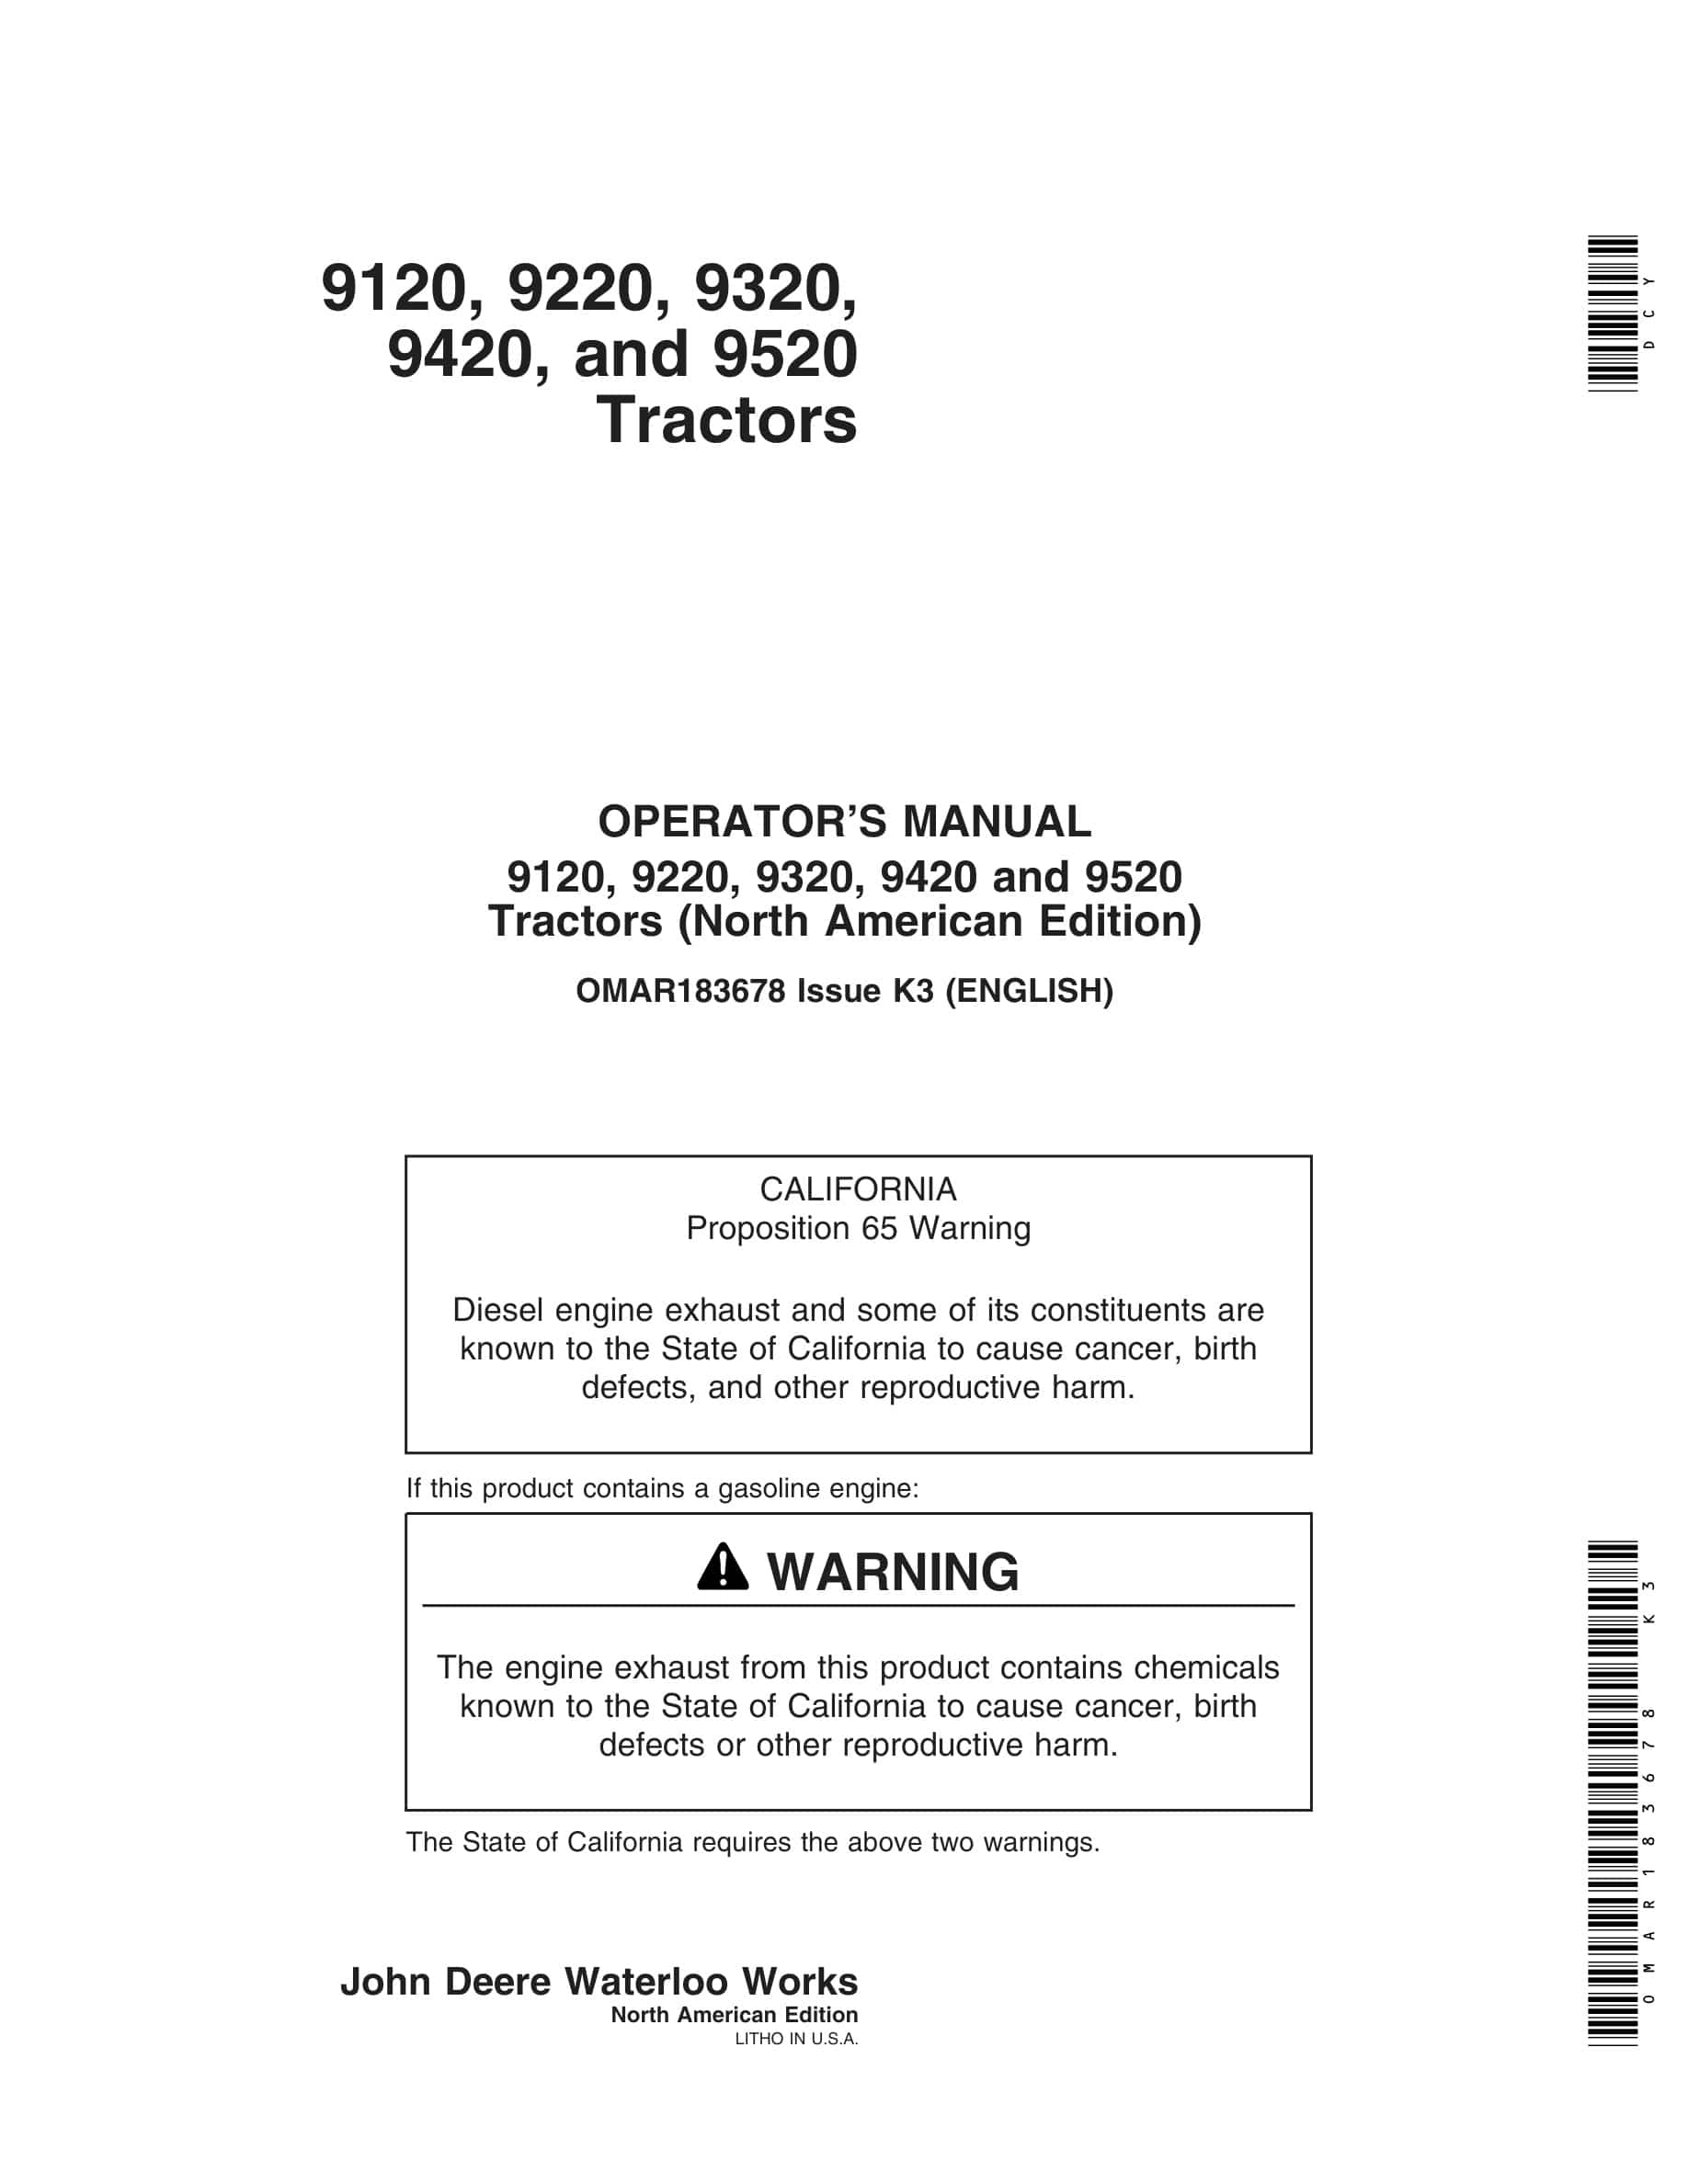 John Deere 9120, 9220, 9320, 9420 And 9520 Tractors Operator Manuals OMAR183678-1